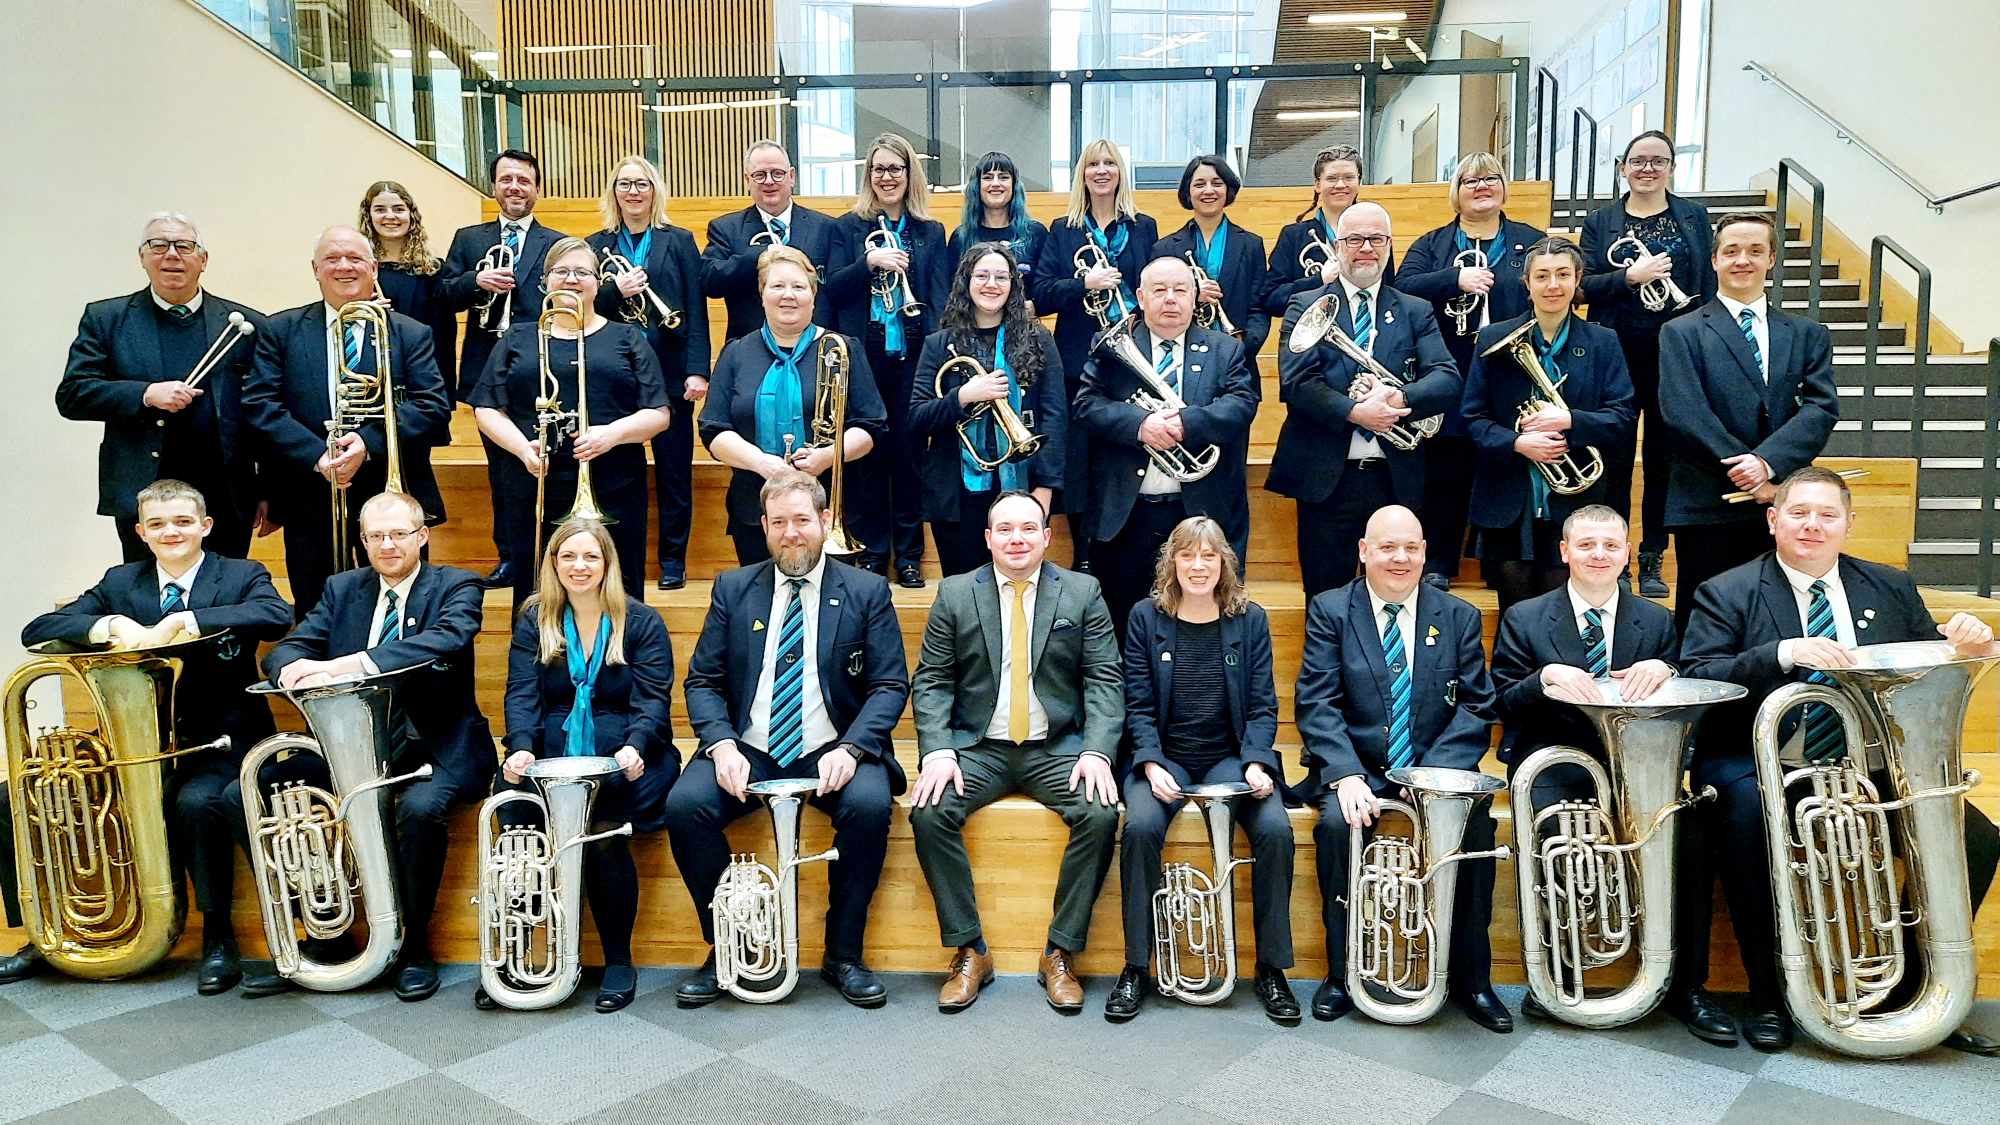 Home - Emley Brass Band